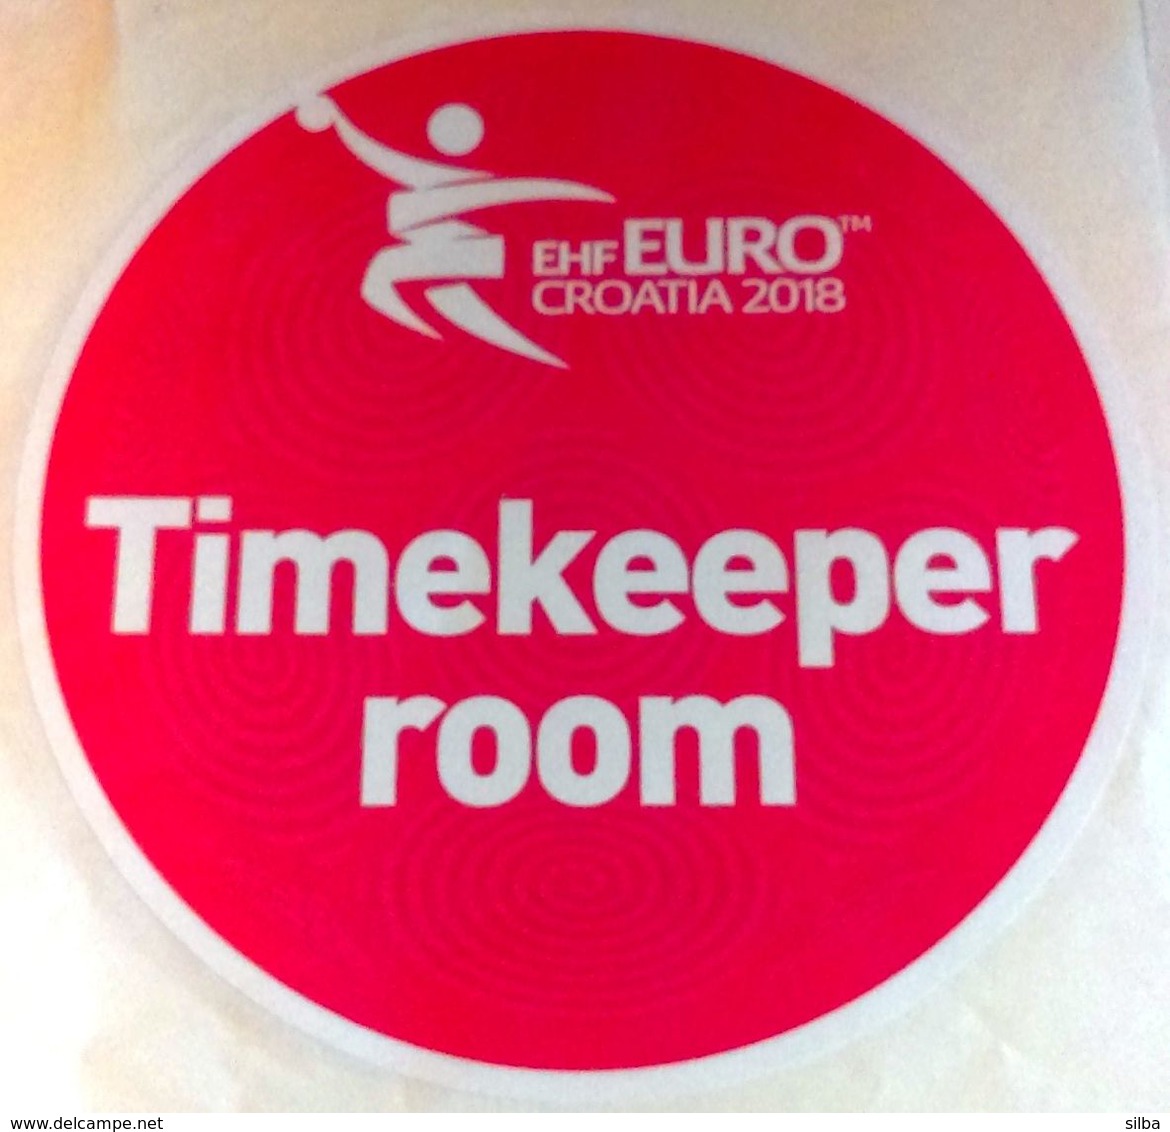 HANDBALL / MEN'S EHF EURO CROATIA 2018 / Main Official Sticker / TIMEKEEPER ROOM - Handbal